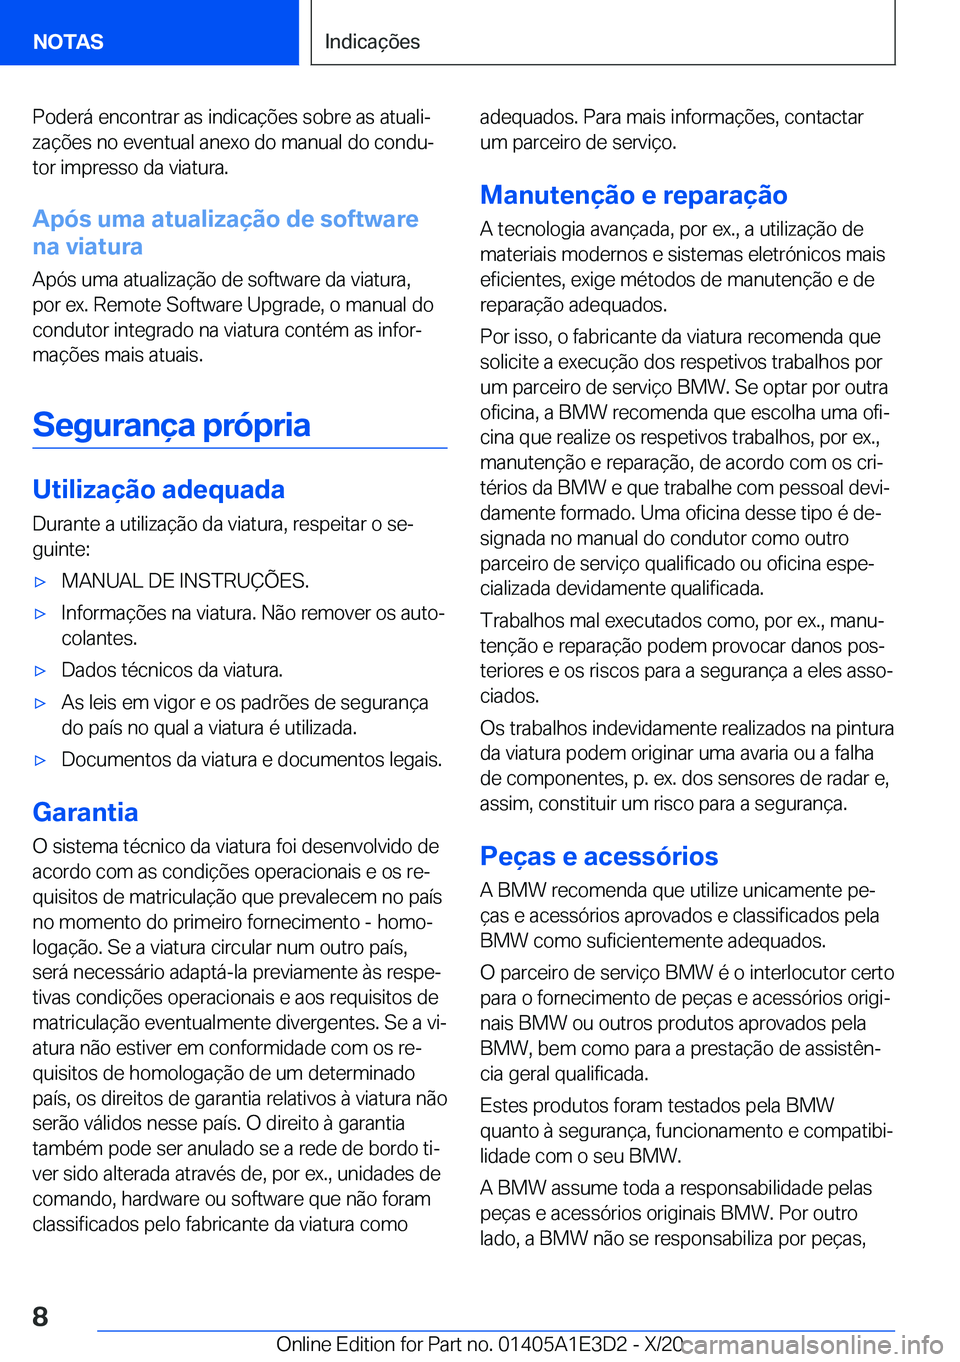 BMW M4 2021  Manual do condutor (in Portuguese) �P�o�d�e�r�á��e�n�c�o�n�t�r�a�r��a�s��i�n�d�i�c�a�